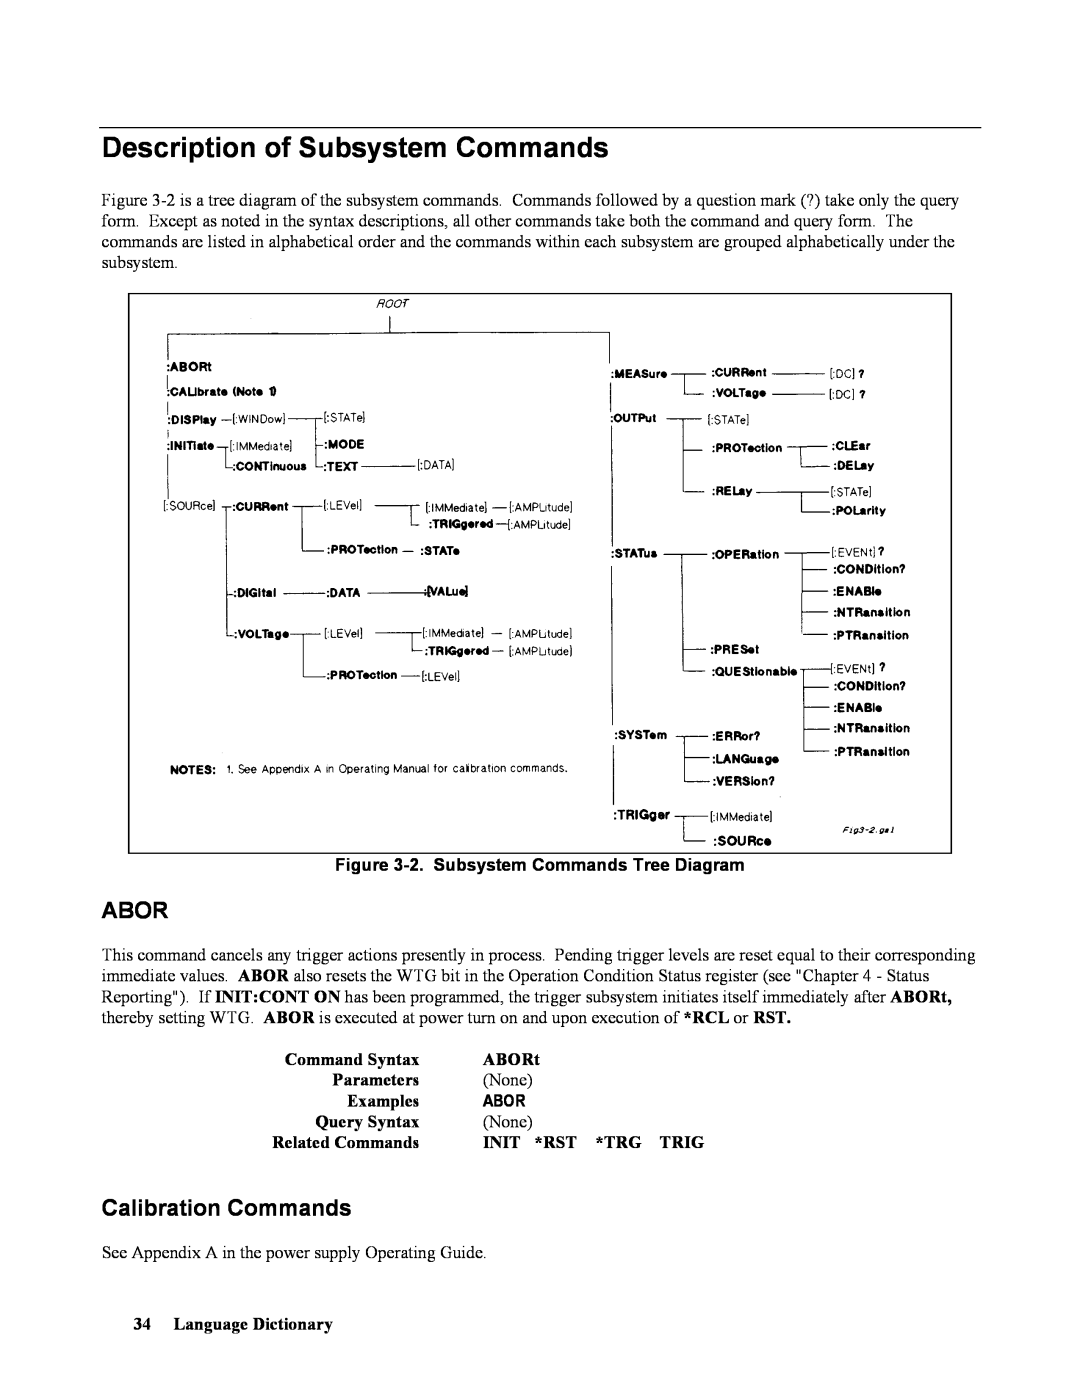 Agilent Technologies 669xA, 665xA, 664xA, 667xA, 668xA manual Description of Subsystem Commands, Abor, Calibration Commands 